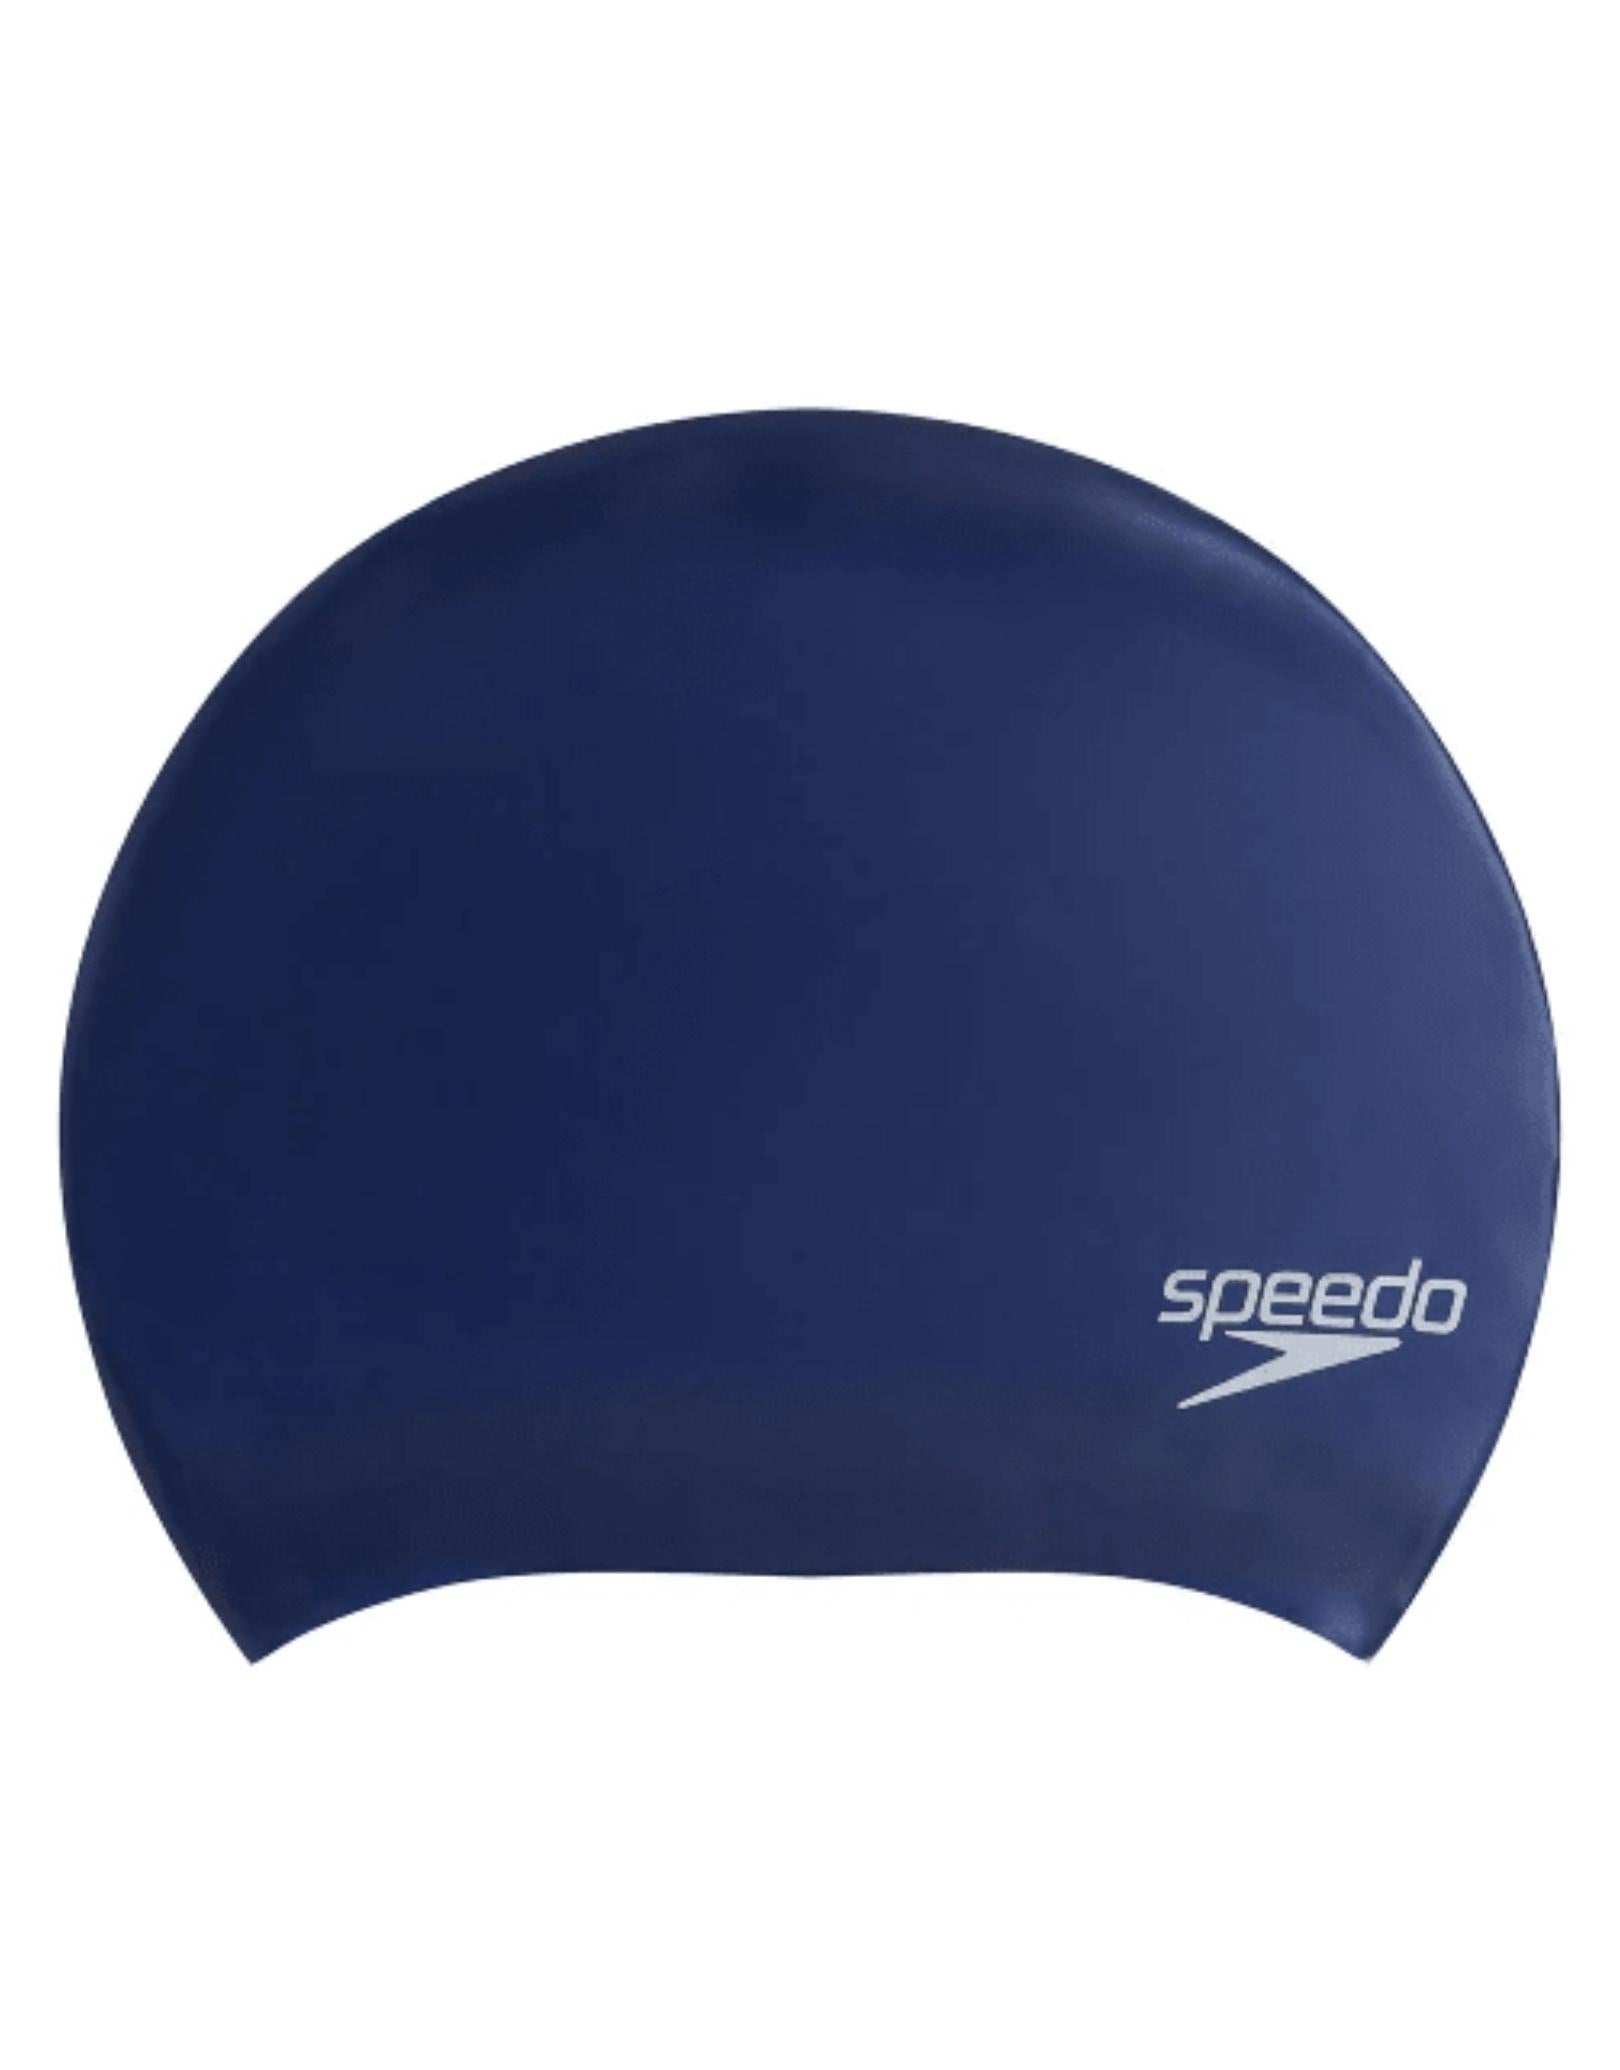 Speedo Long Hair Swim Cap | Simply Swim | Simply Swim UK